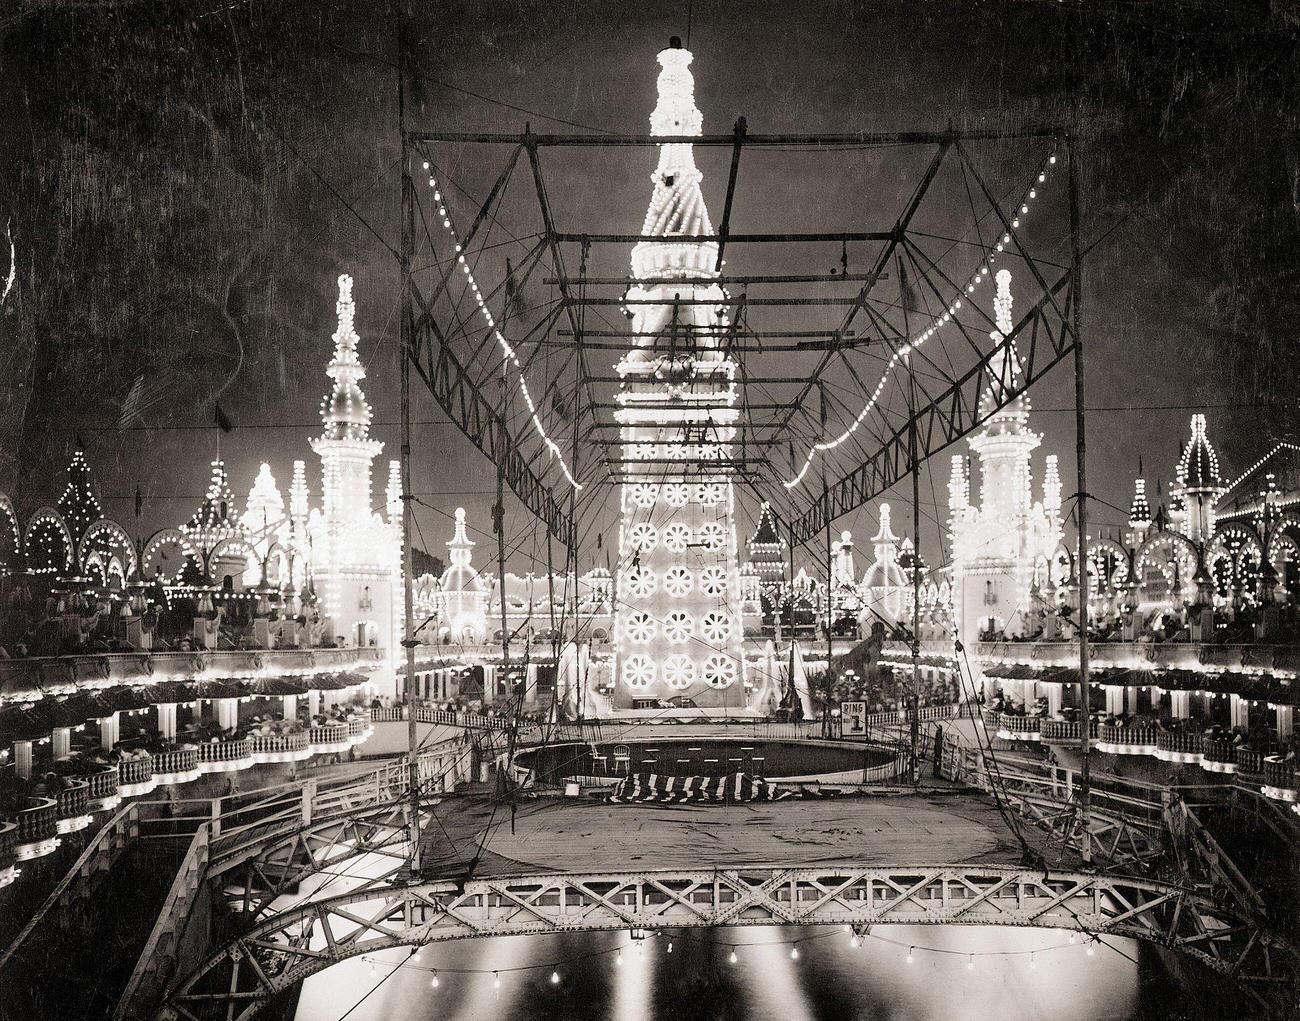 Illuminated Towers At Night In Luna Park, 1905